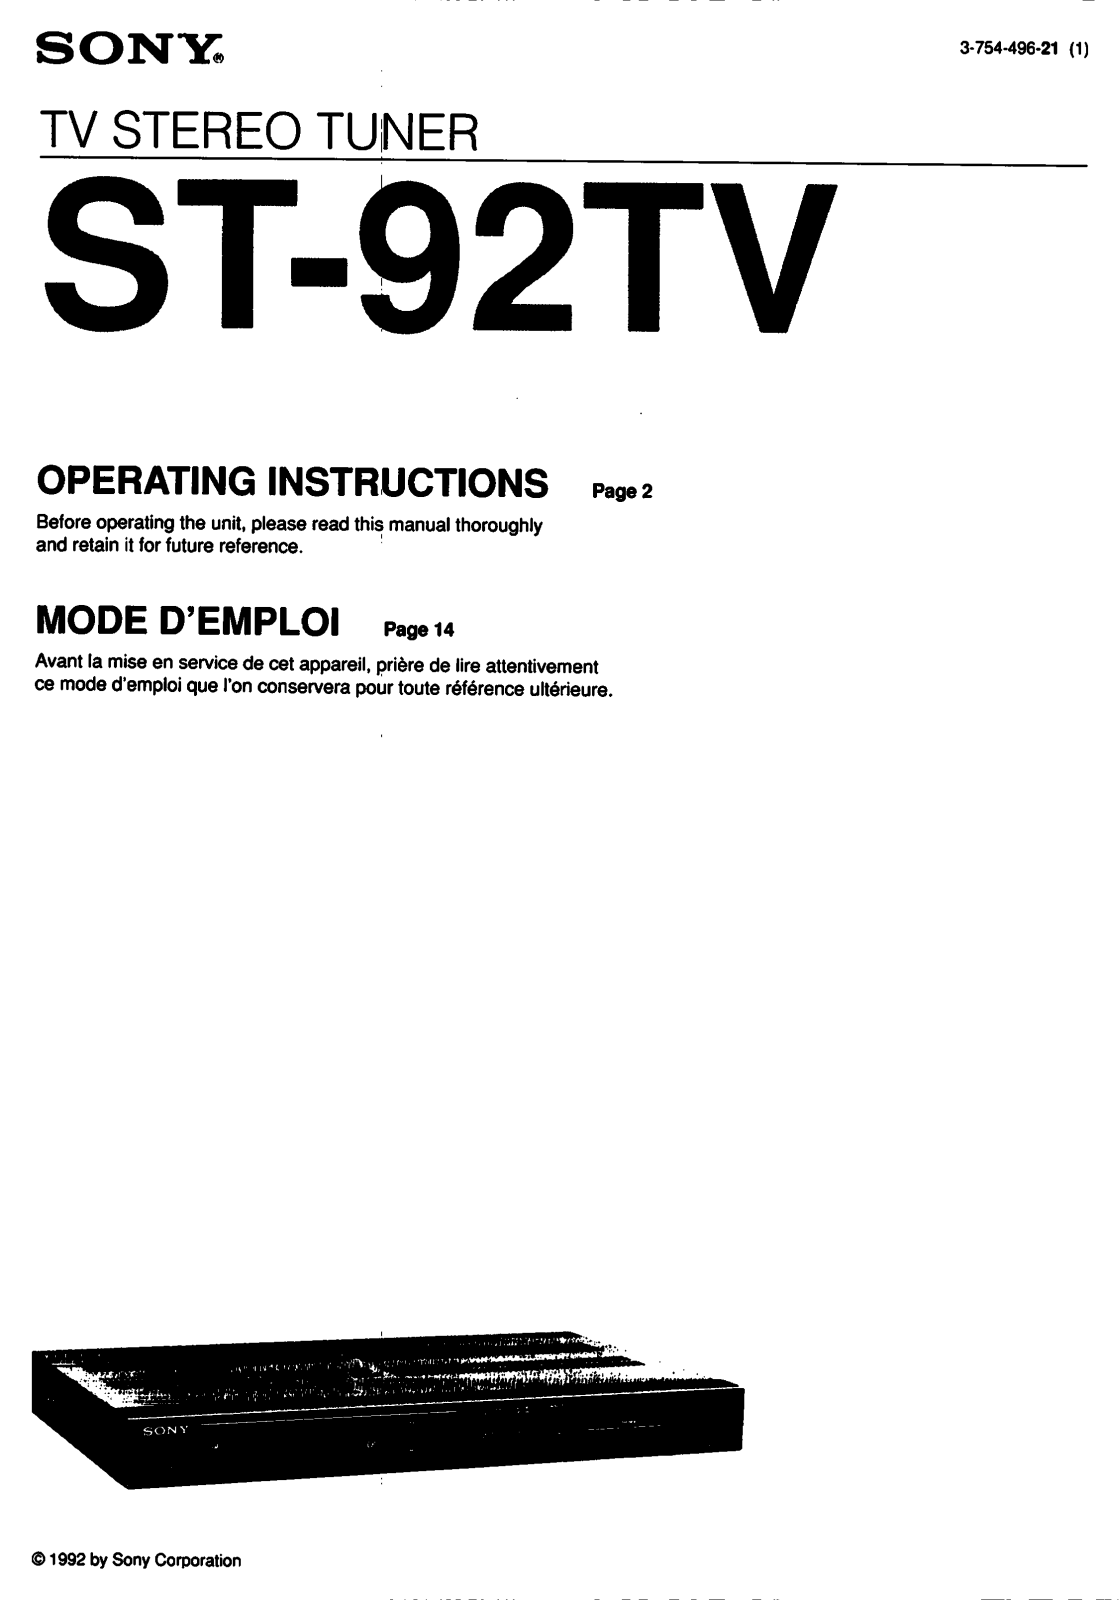 Sony ST-92TV User Manual